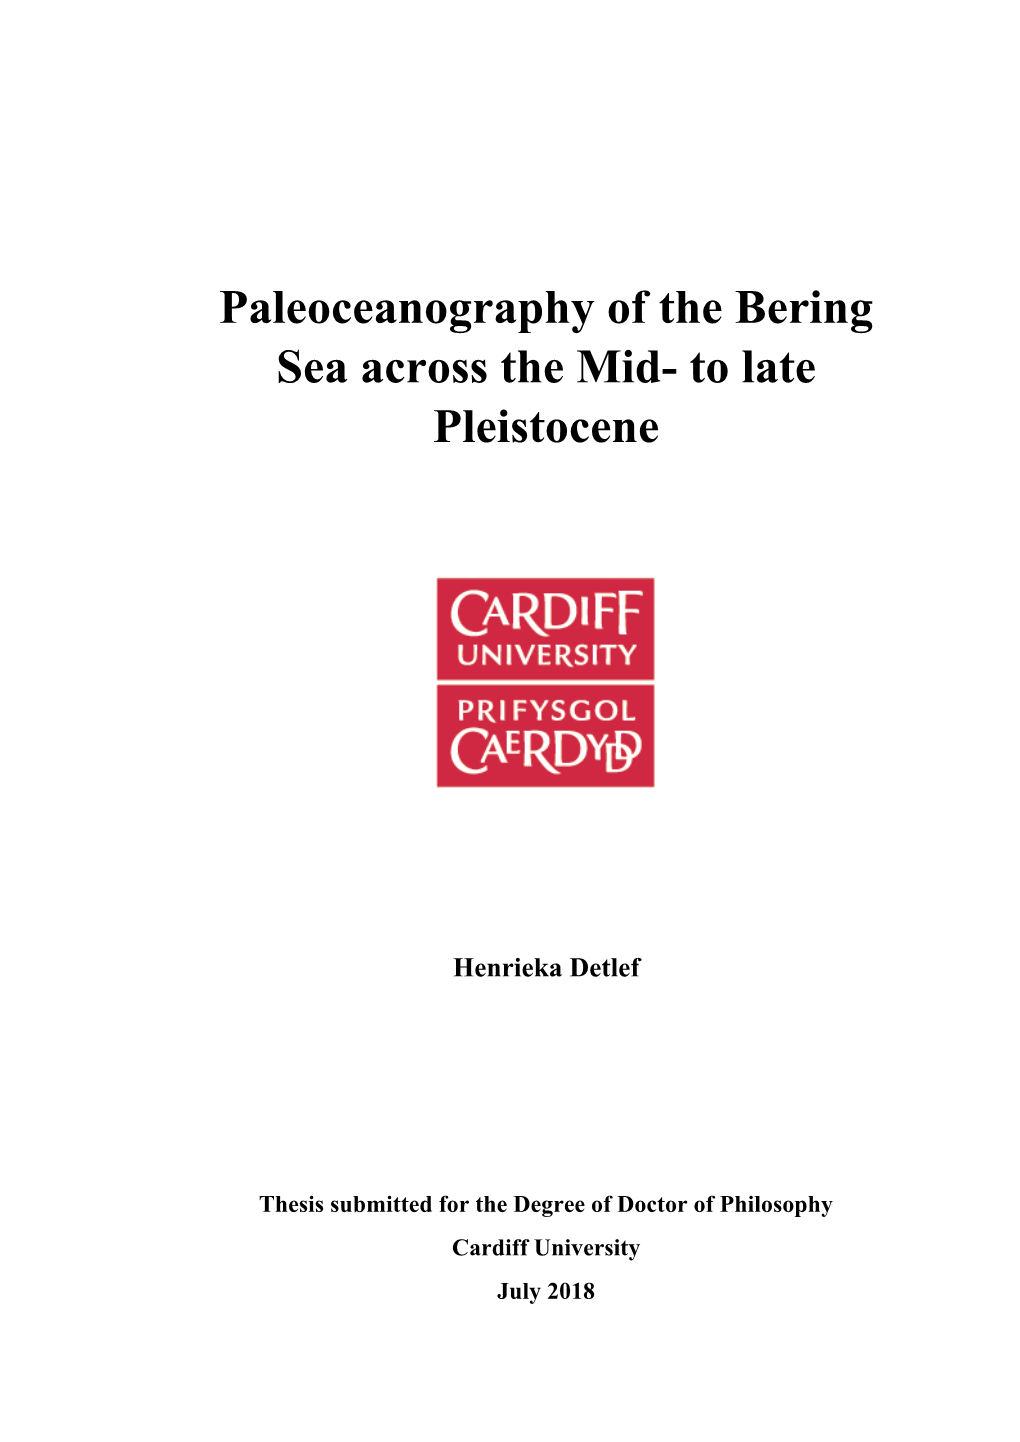 Paleoceanography of the Bering Sea Across the Mid- to Late Pleistocene